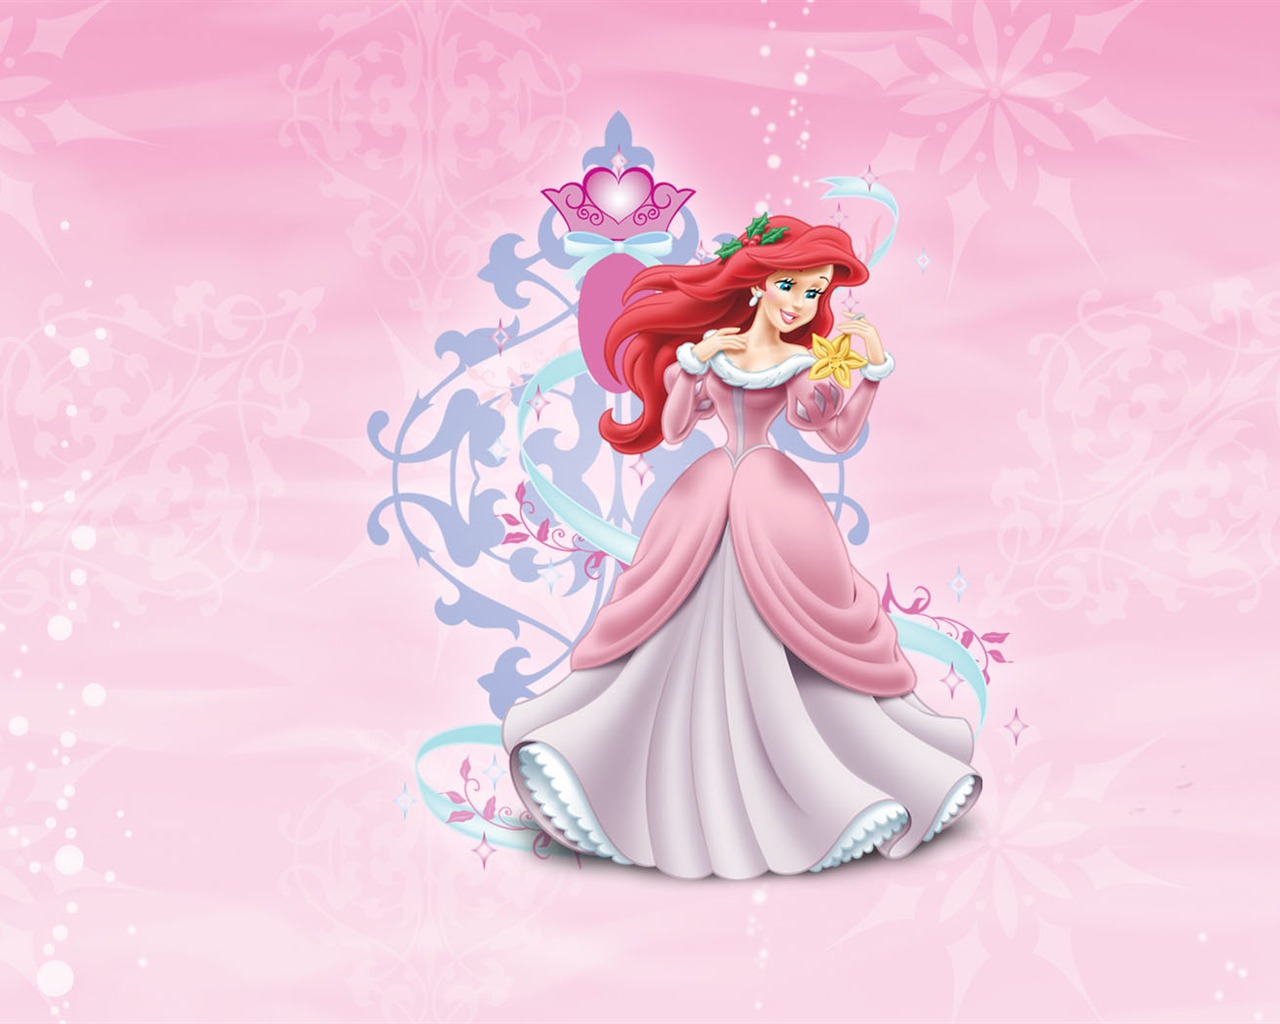 Disney Princess Hd Wallpapers High Definition Free Afalchi Free images wallpape [afalchi.blogspot.com]